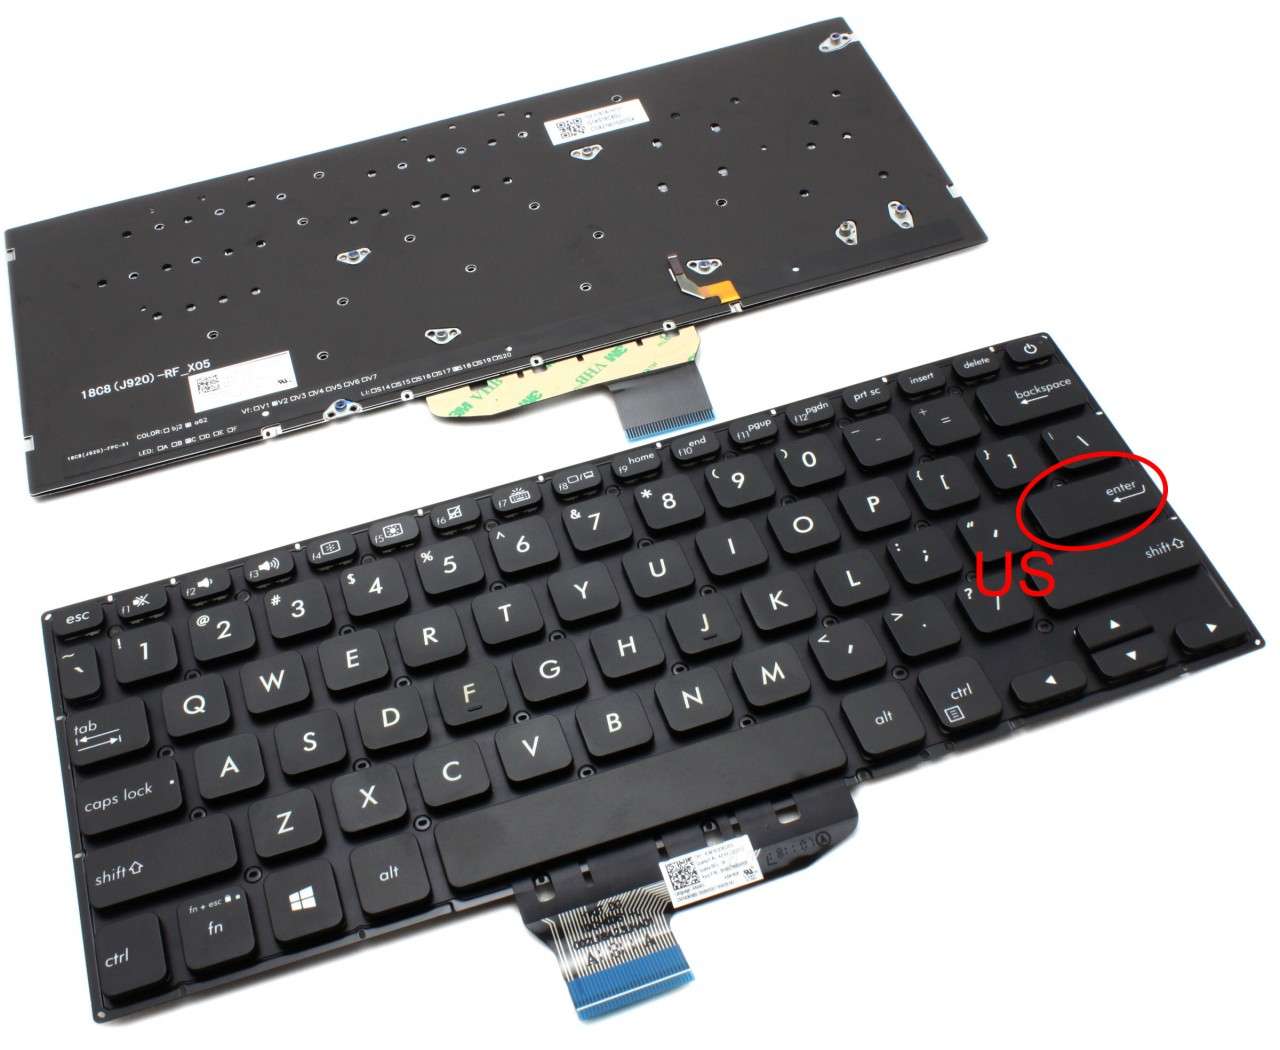 Tastatura Asus VivoBook S14 S430U iluminata layout US fara rama enter mic